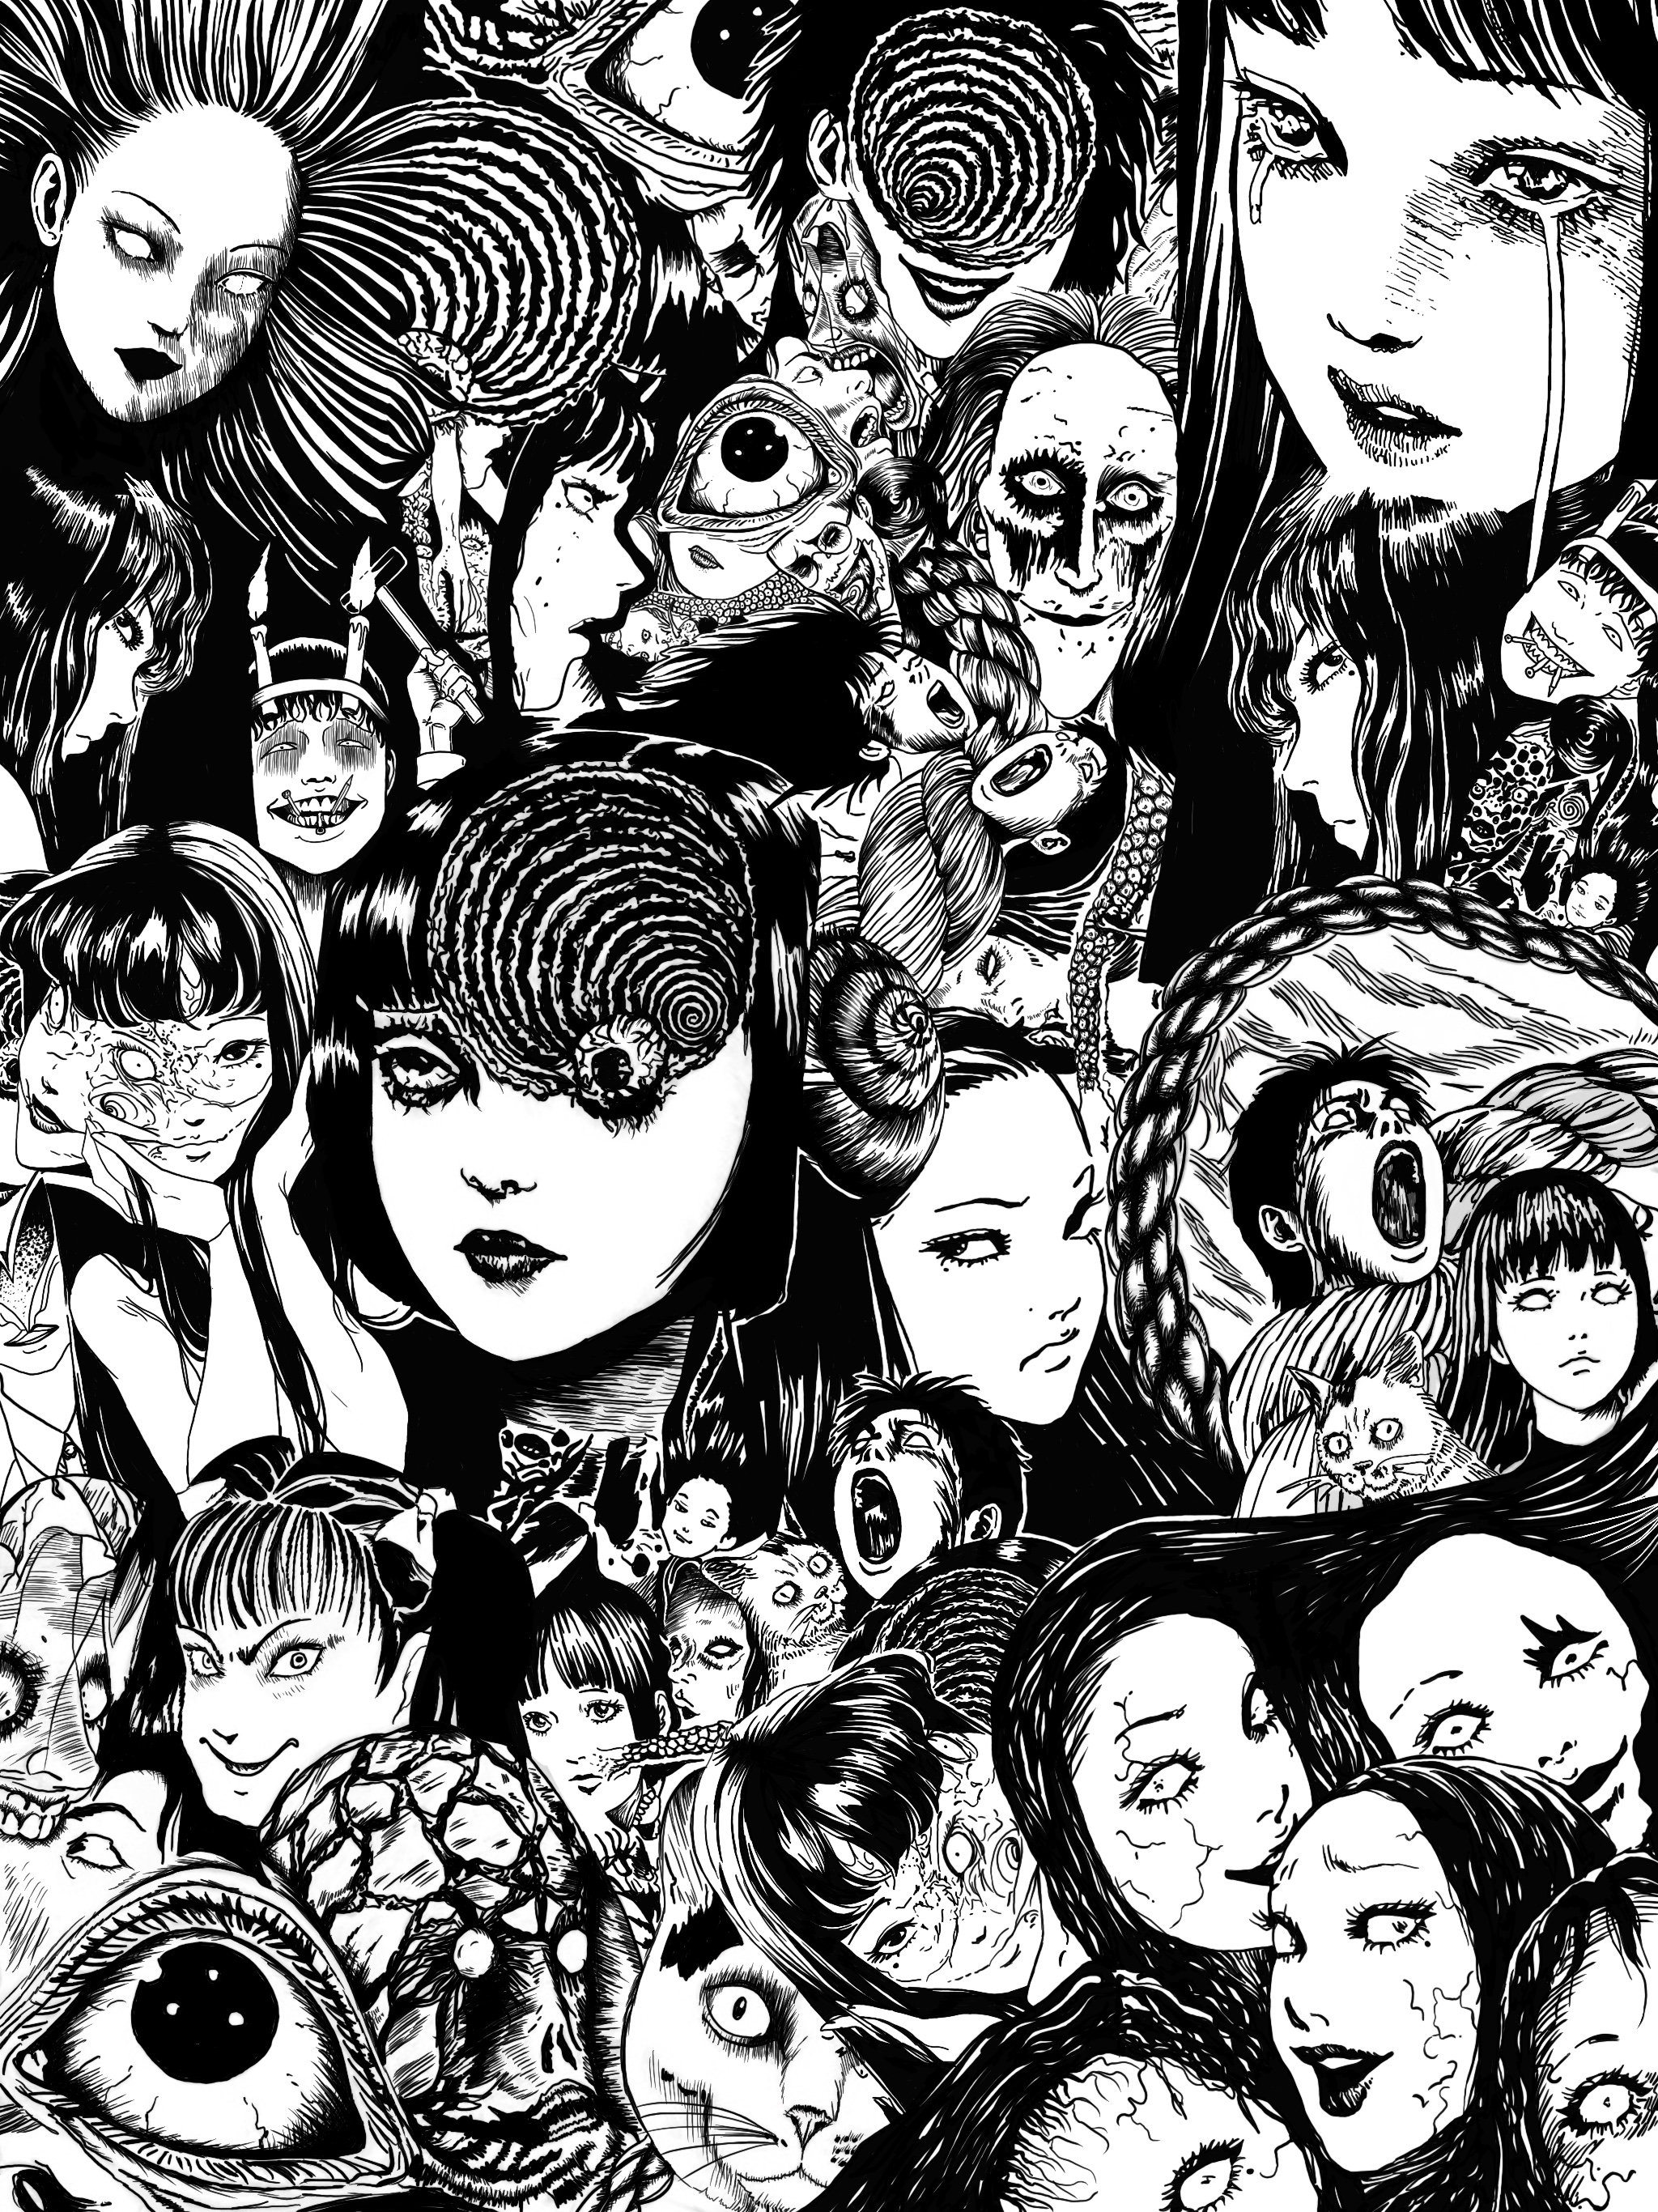 manga panel in the style of Junji Ito, Midjourney